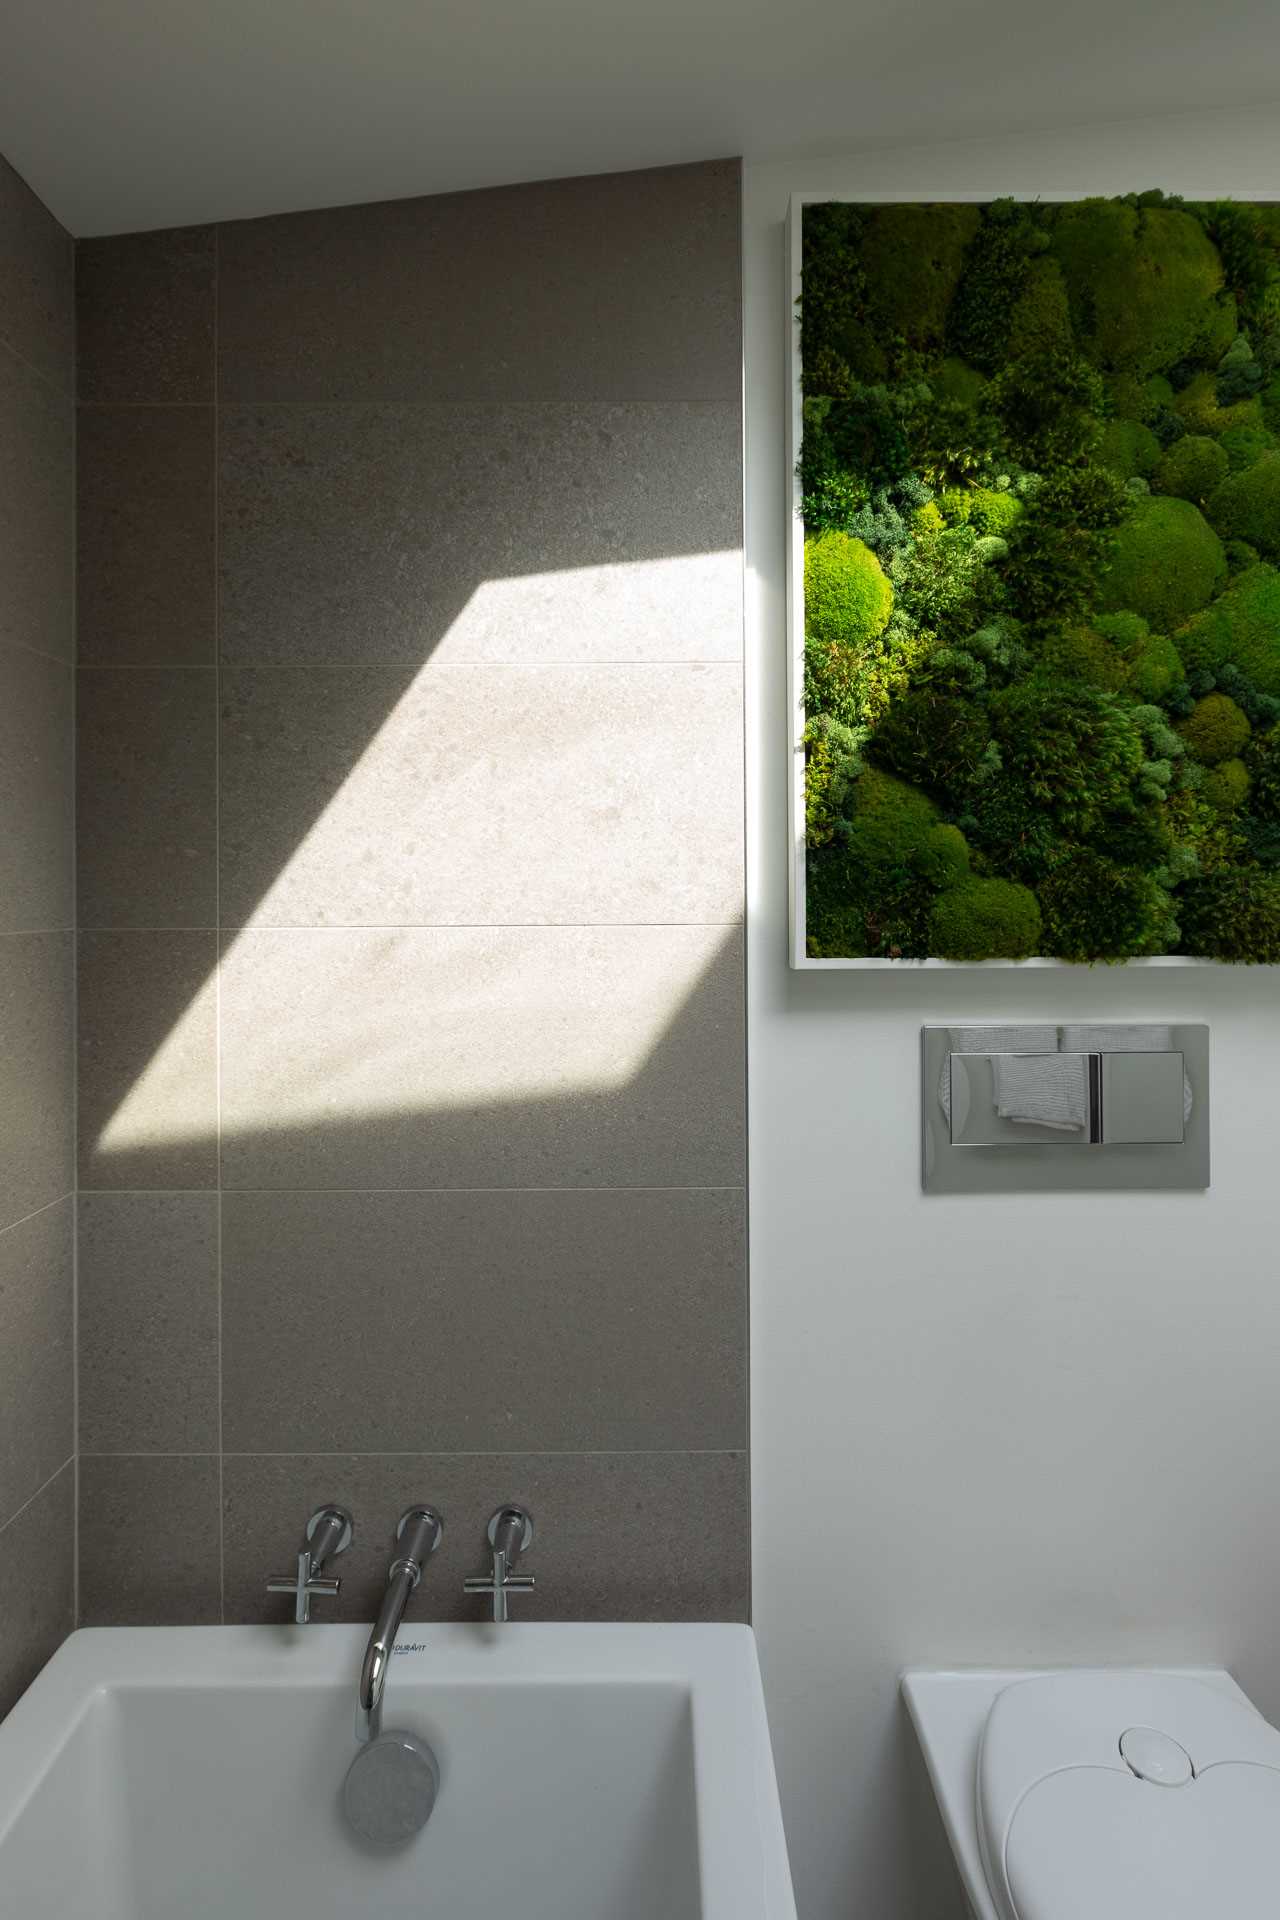 A modern bathroom with oversized tiles.